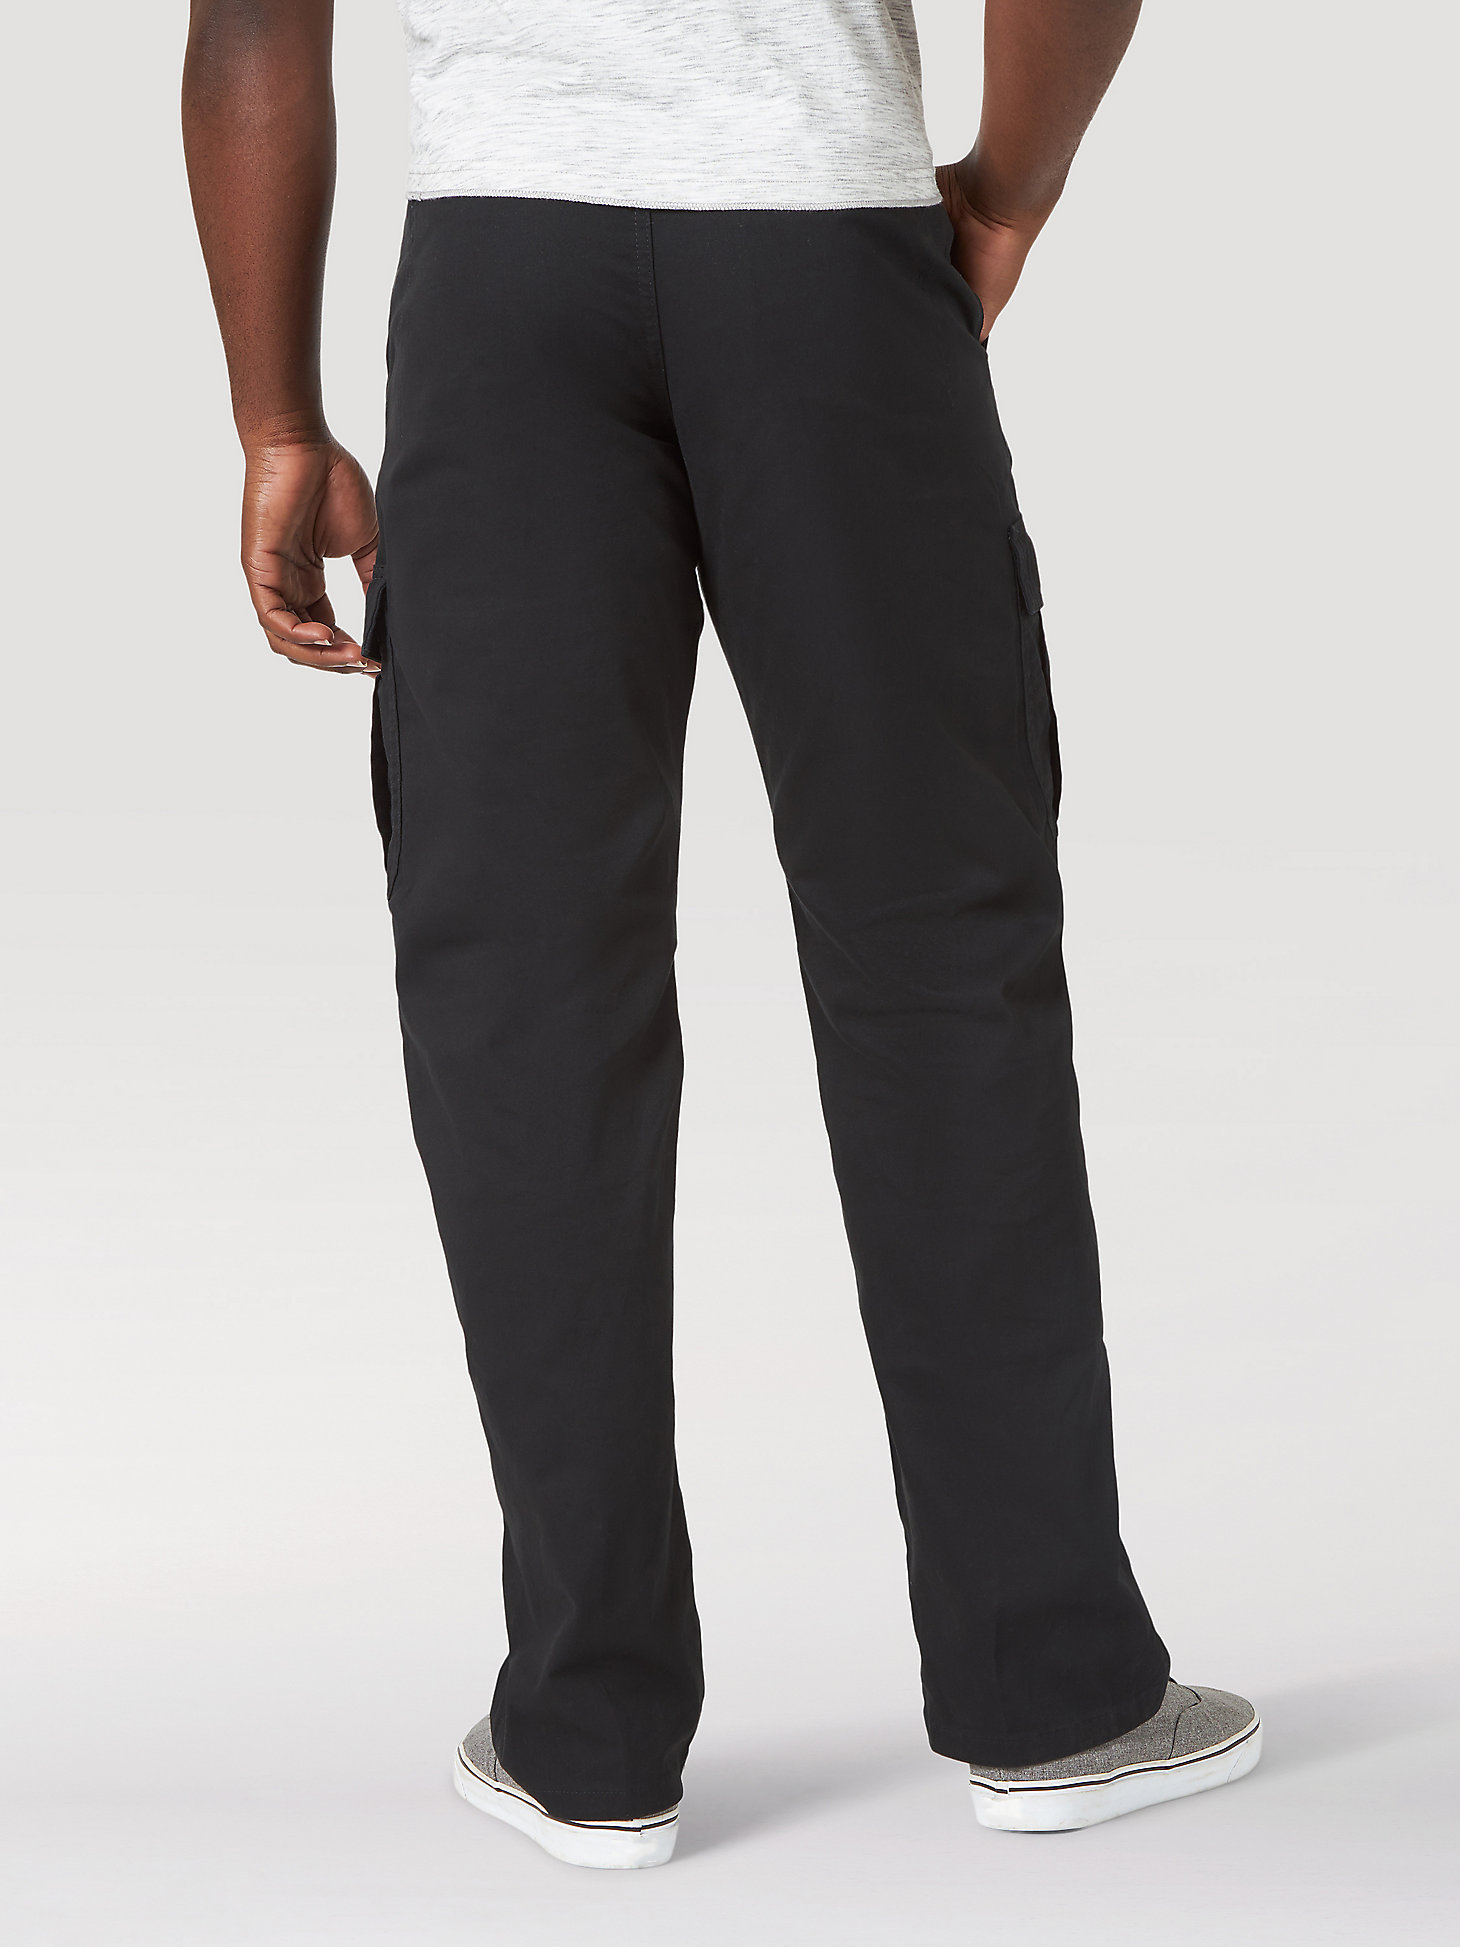 Wrangler® Men's Five Star Premium Relaxed Fit Flex Cargo Pant in Black alternative view 6